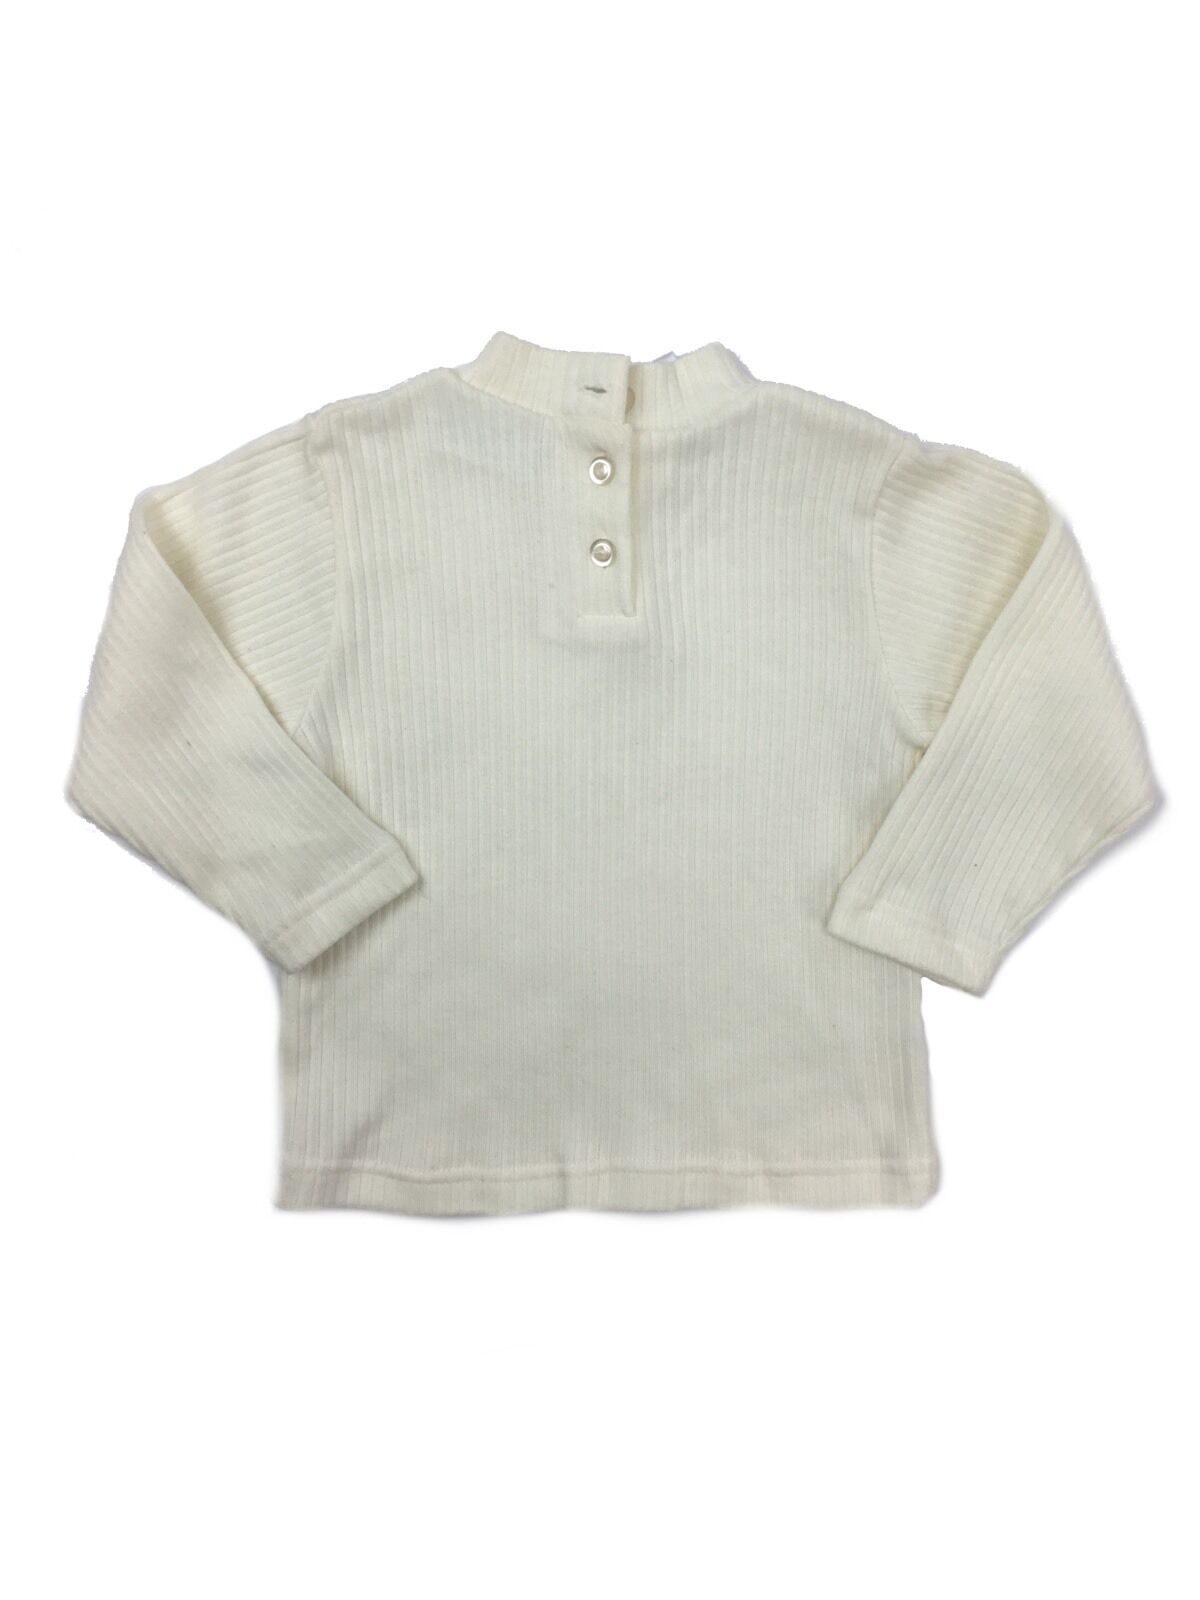 NEW ALL MINE boy\'s size 24M ivory sweater  